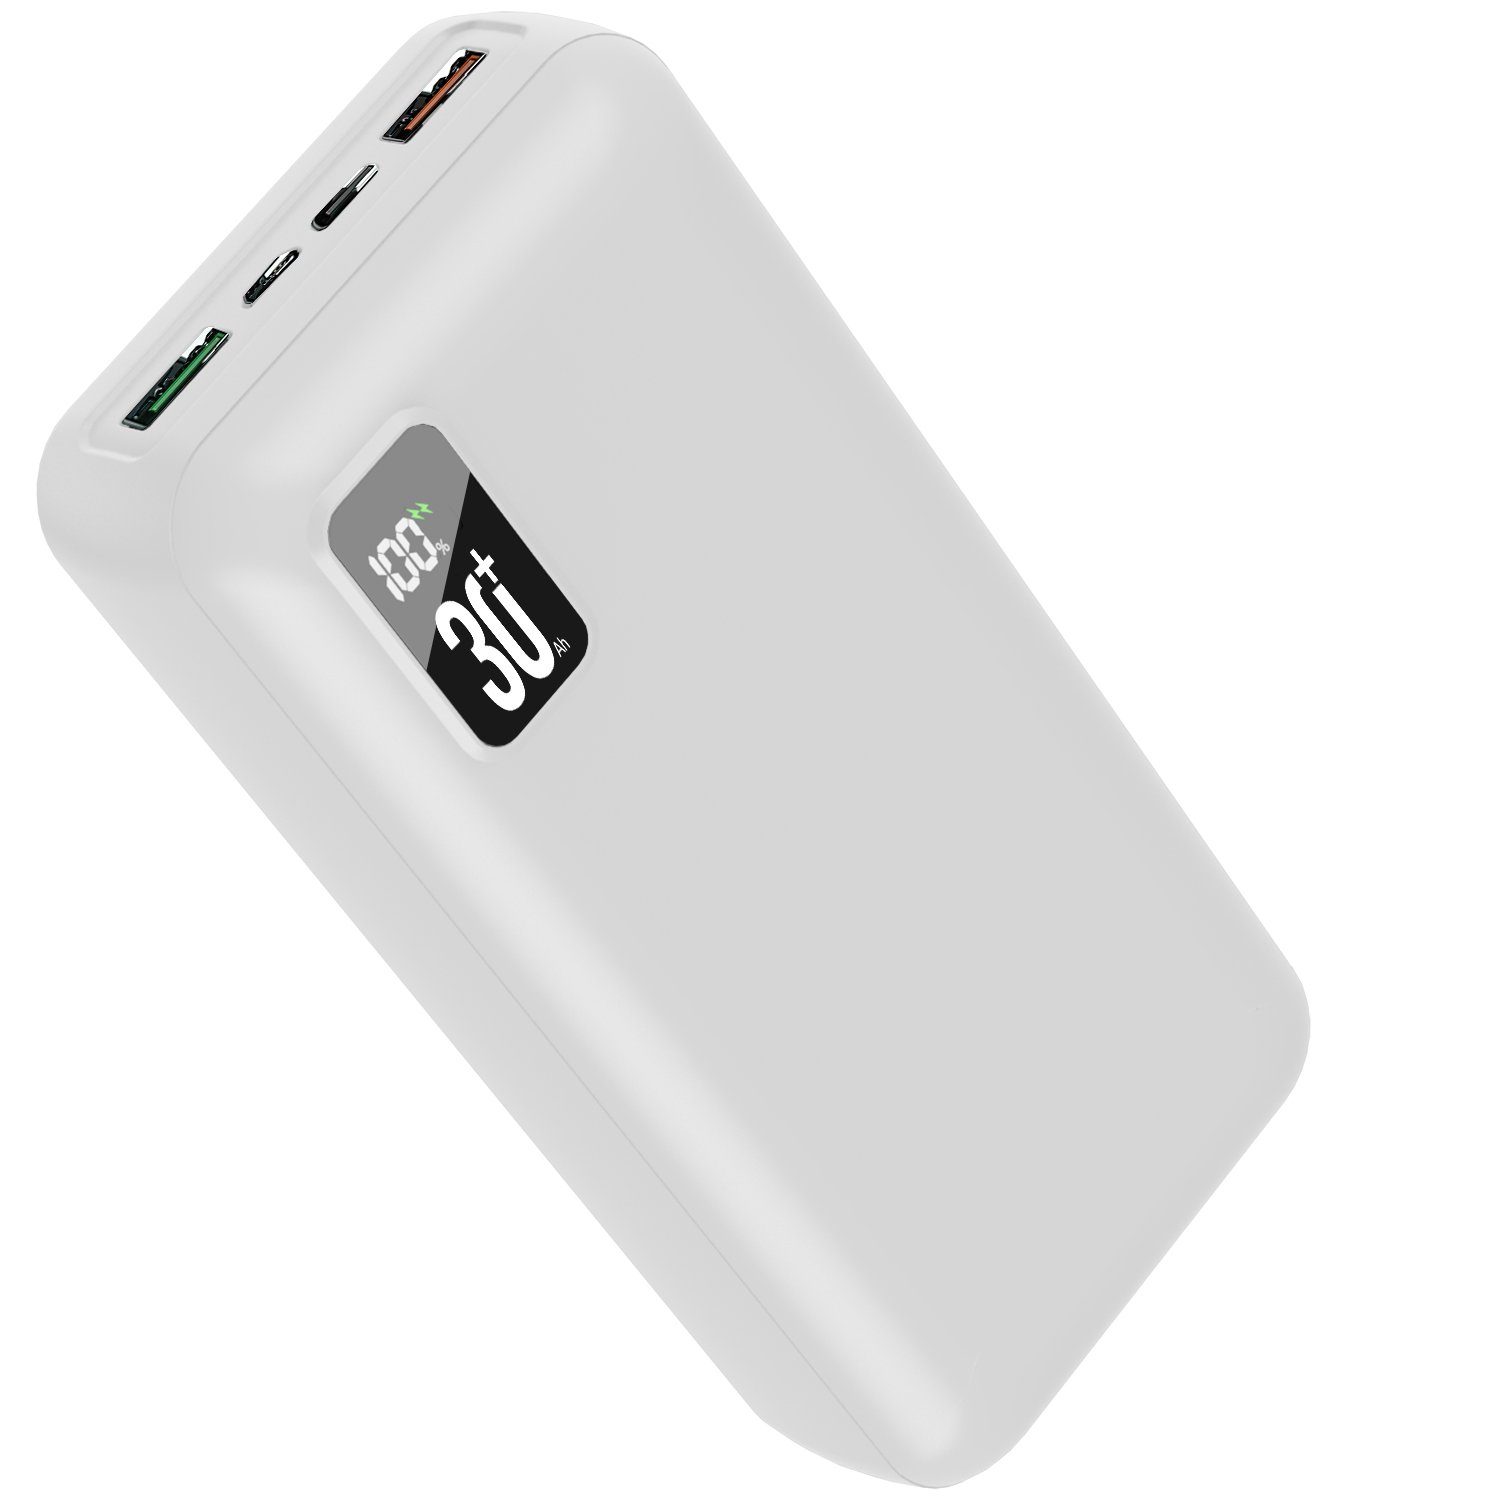 JOEAIS Powerbank 30000mAh Externe Handyakkus Batterie USB Type C Externe Akku Powerbank, 22.5W Ladegerät Kompatibel